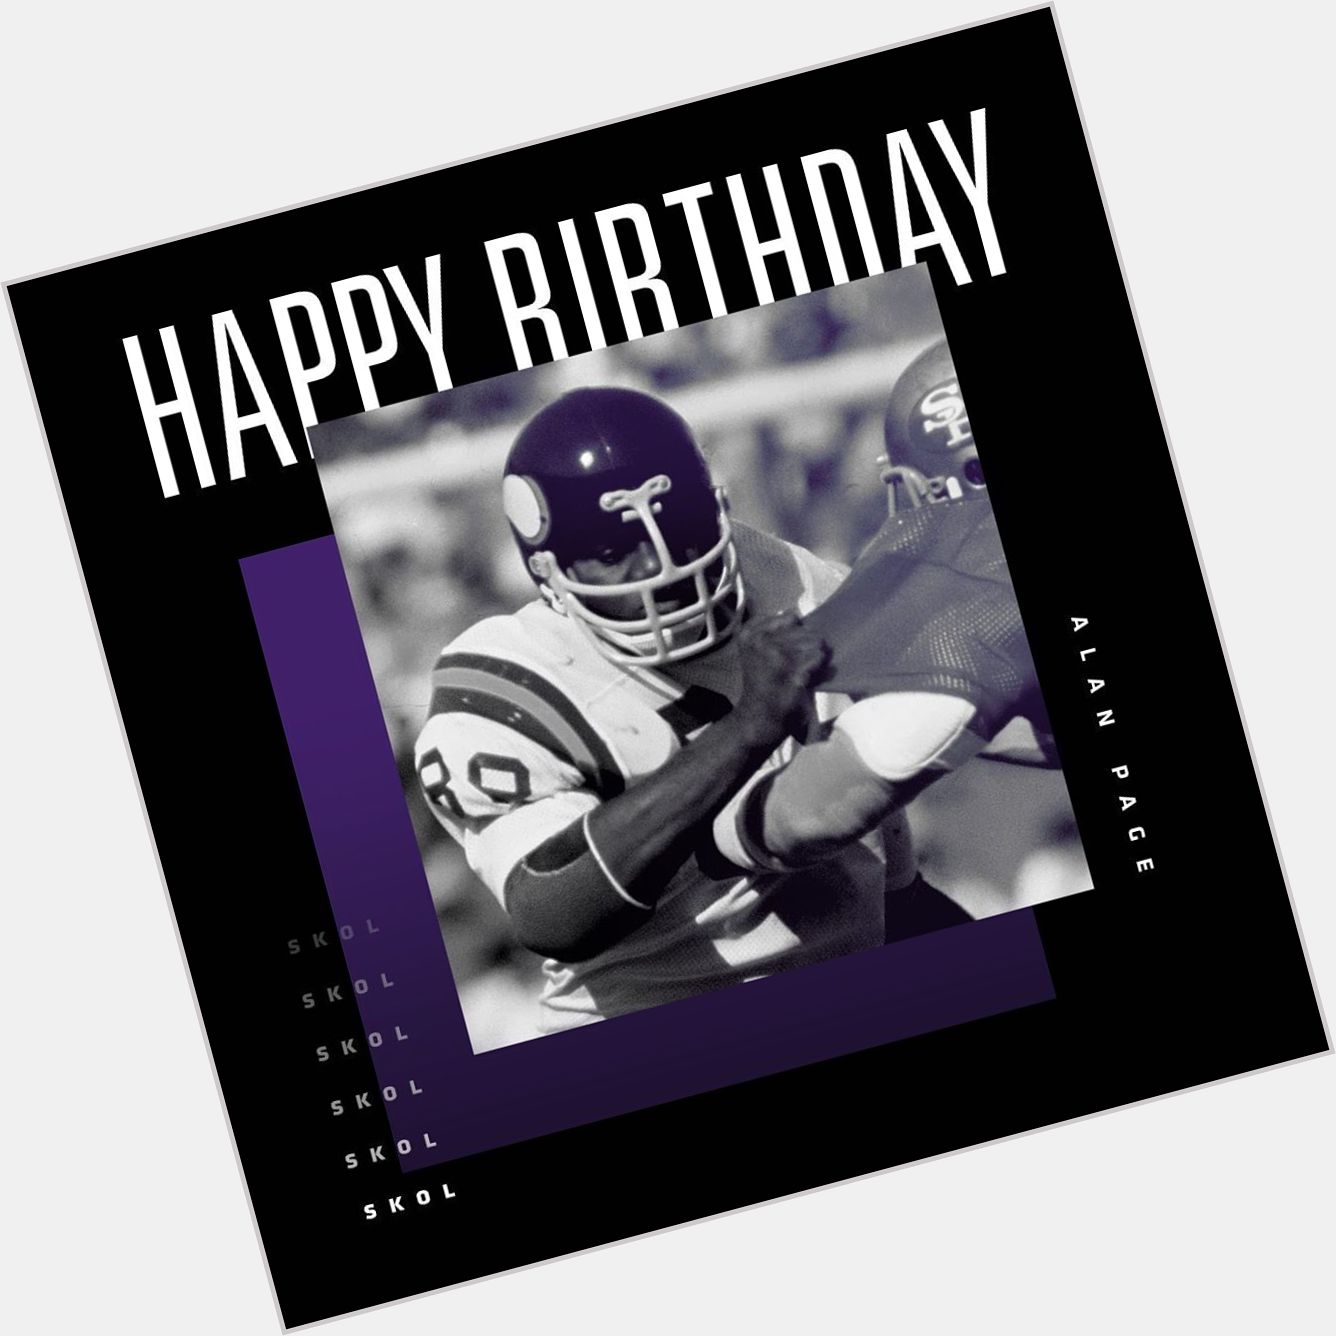 Minnesota Vikings: Happy birthday to the legendary Alan Page! ... 
 
 